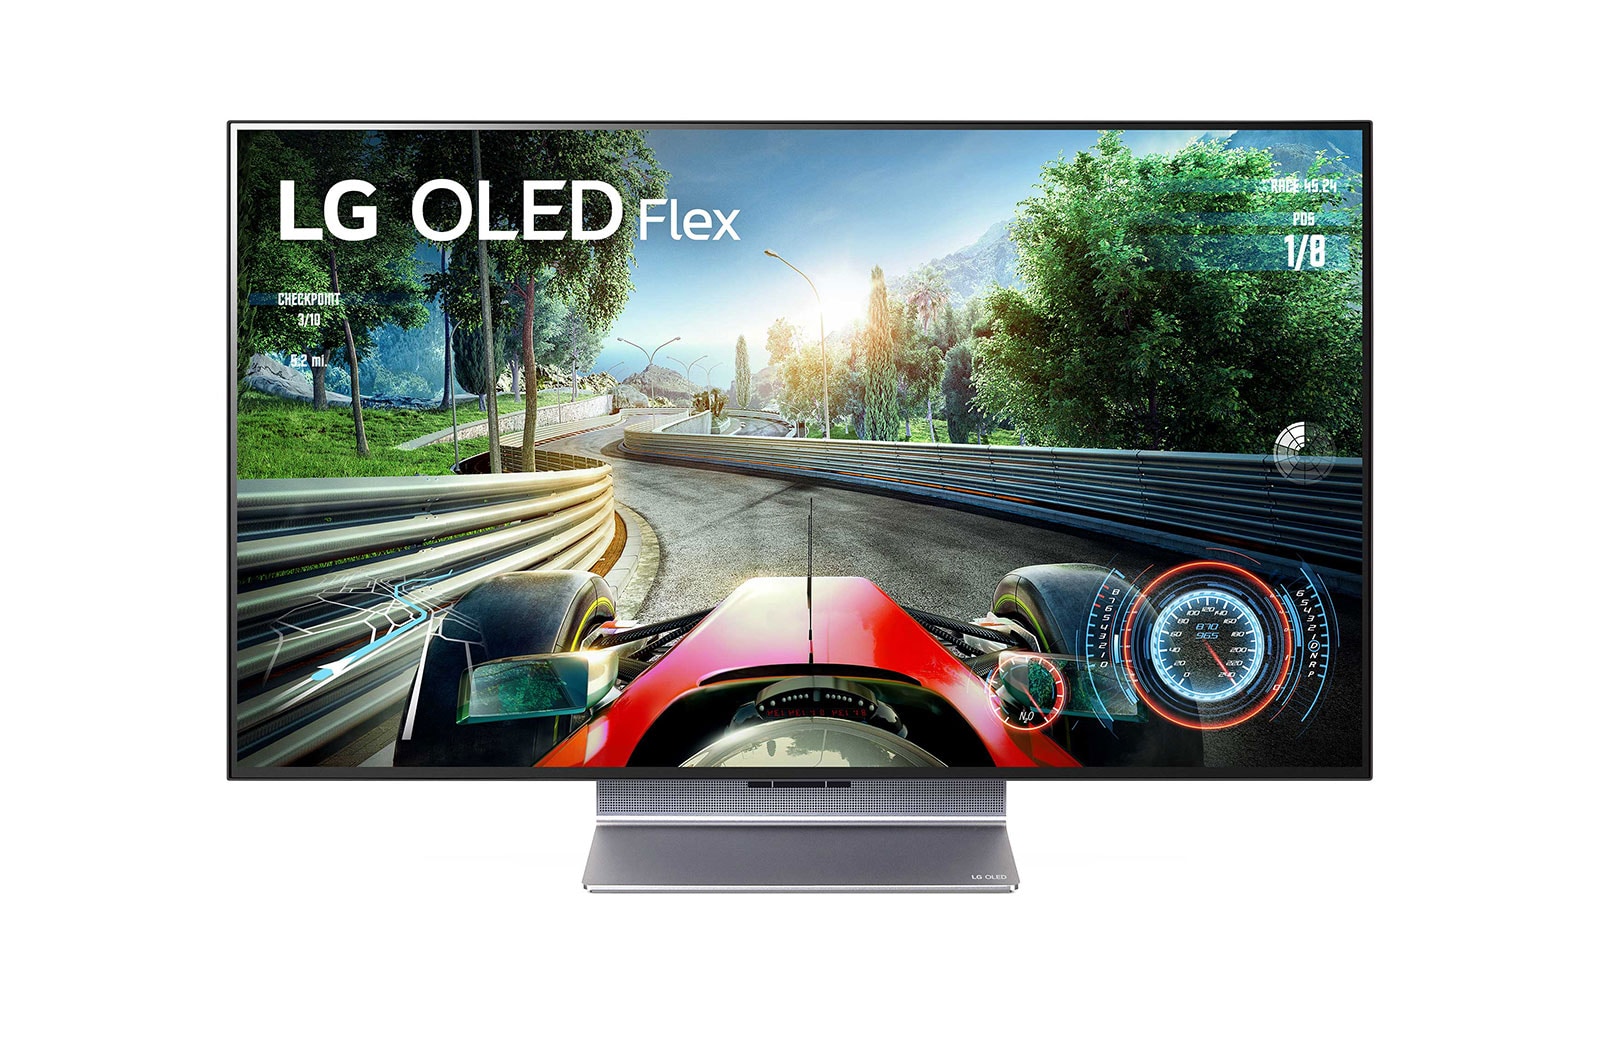 LG OLED Flex Gaming TV | Flexible Curved Display | Small TV | Gaming & PC room setup | Console TV | Ultra HD 4K resolution | AI ThinQ, 42LX3QPSA